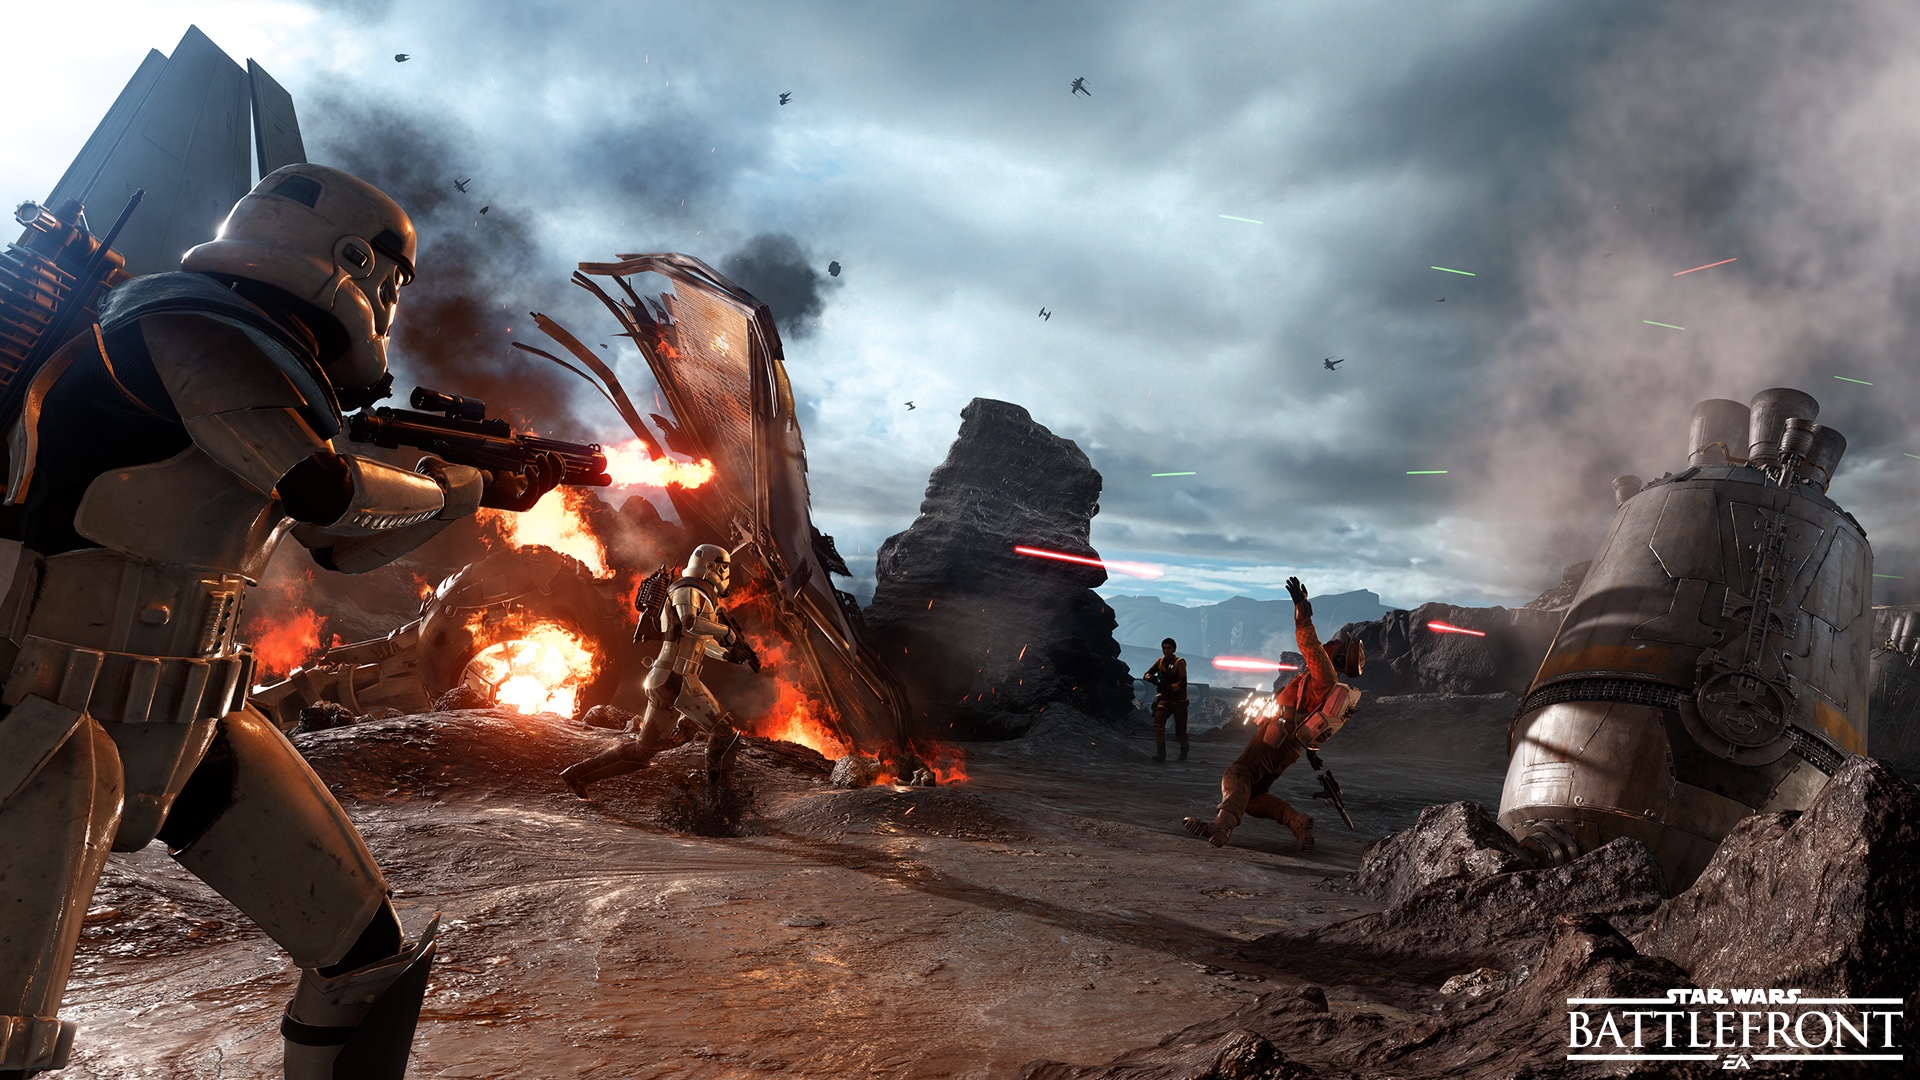 Video Game Star Wars Battlefront (2015) HD Wallpaper | Background Image